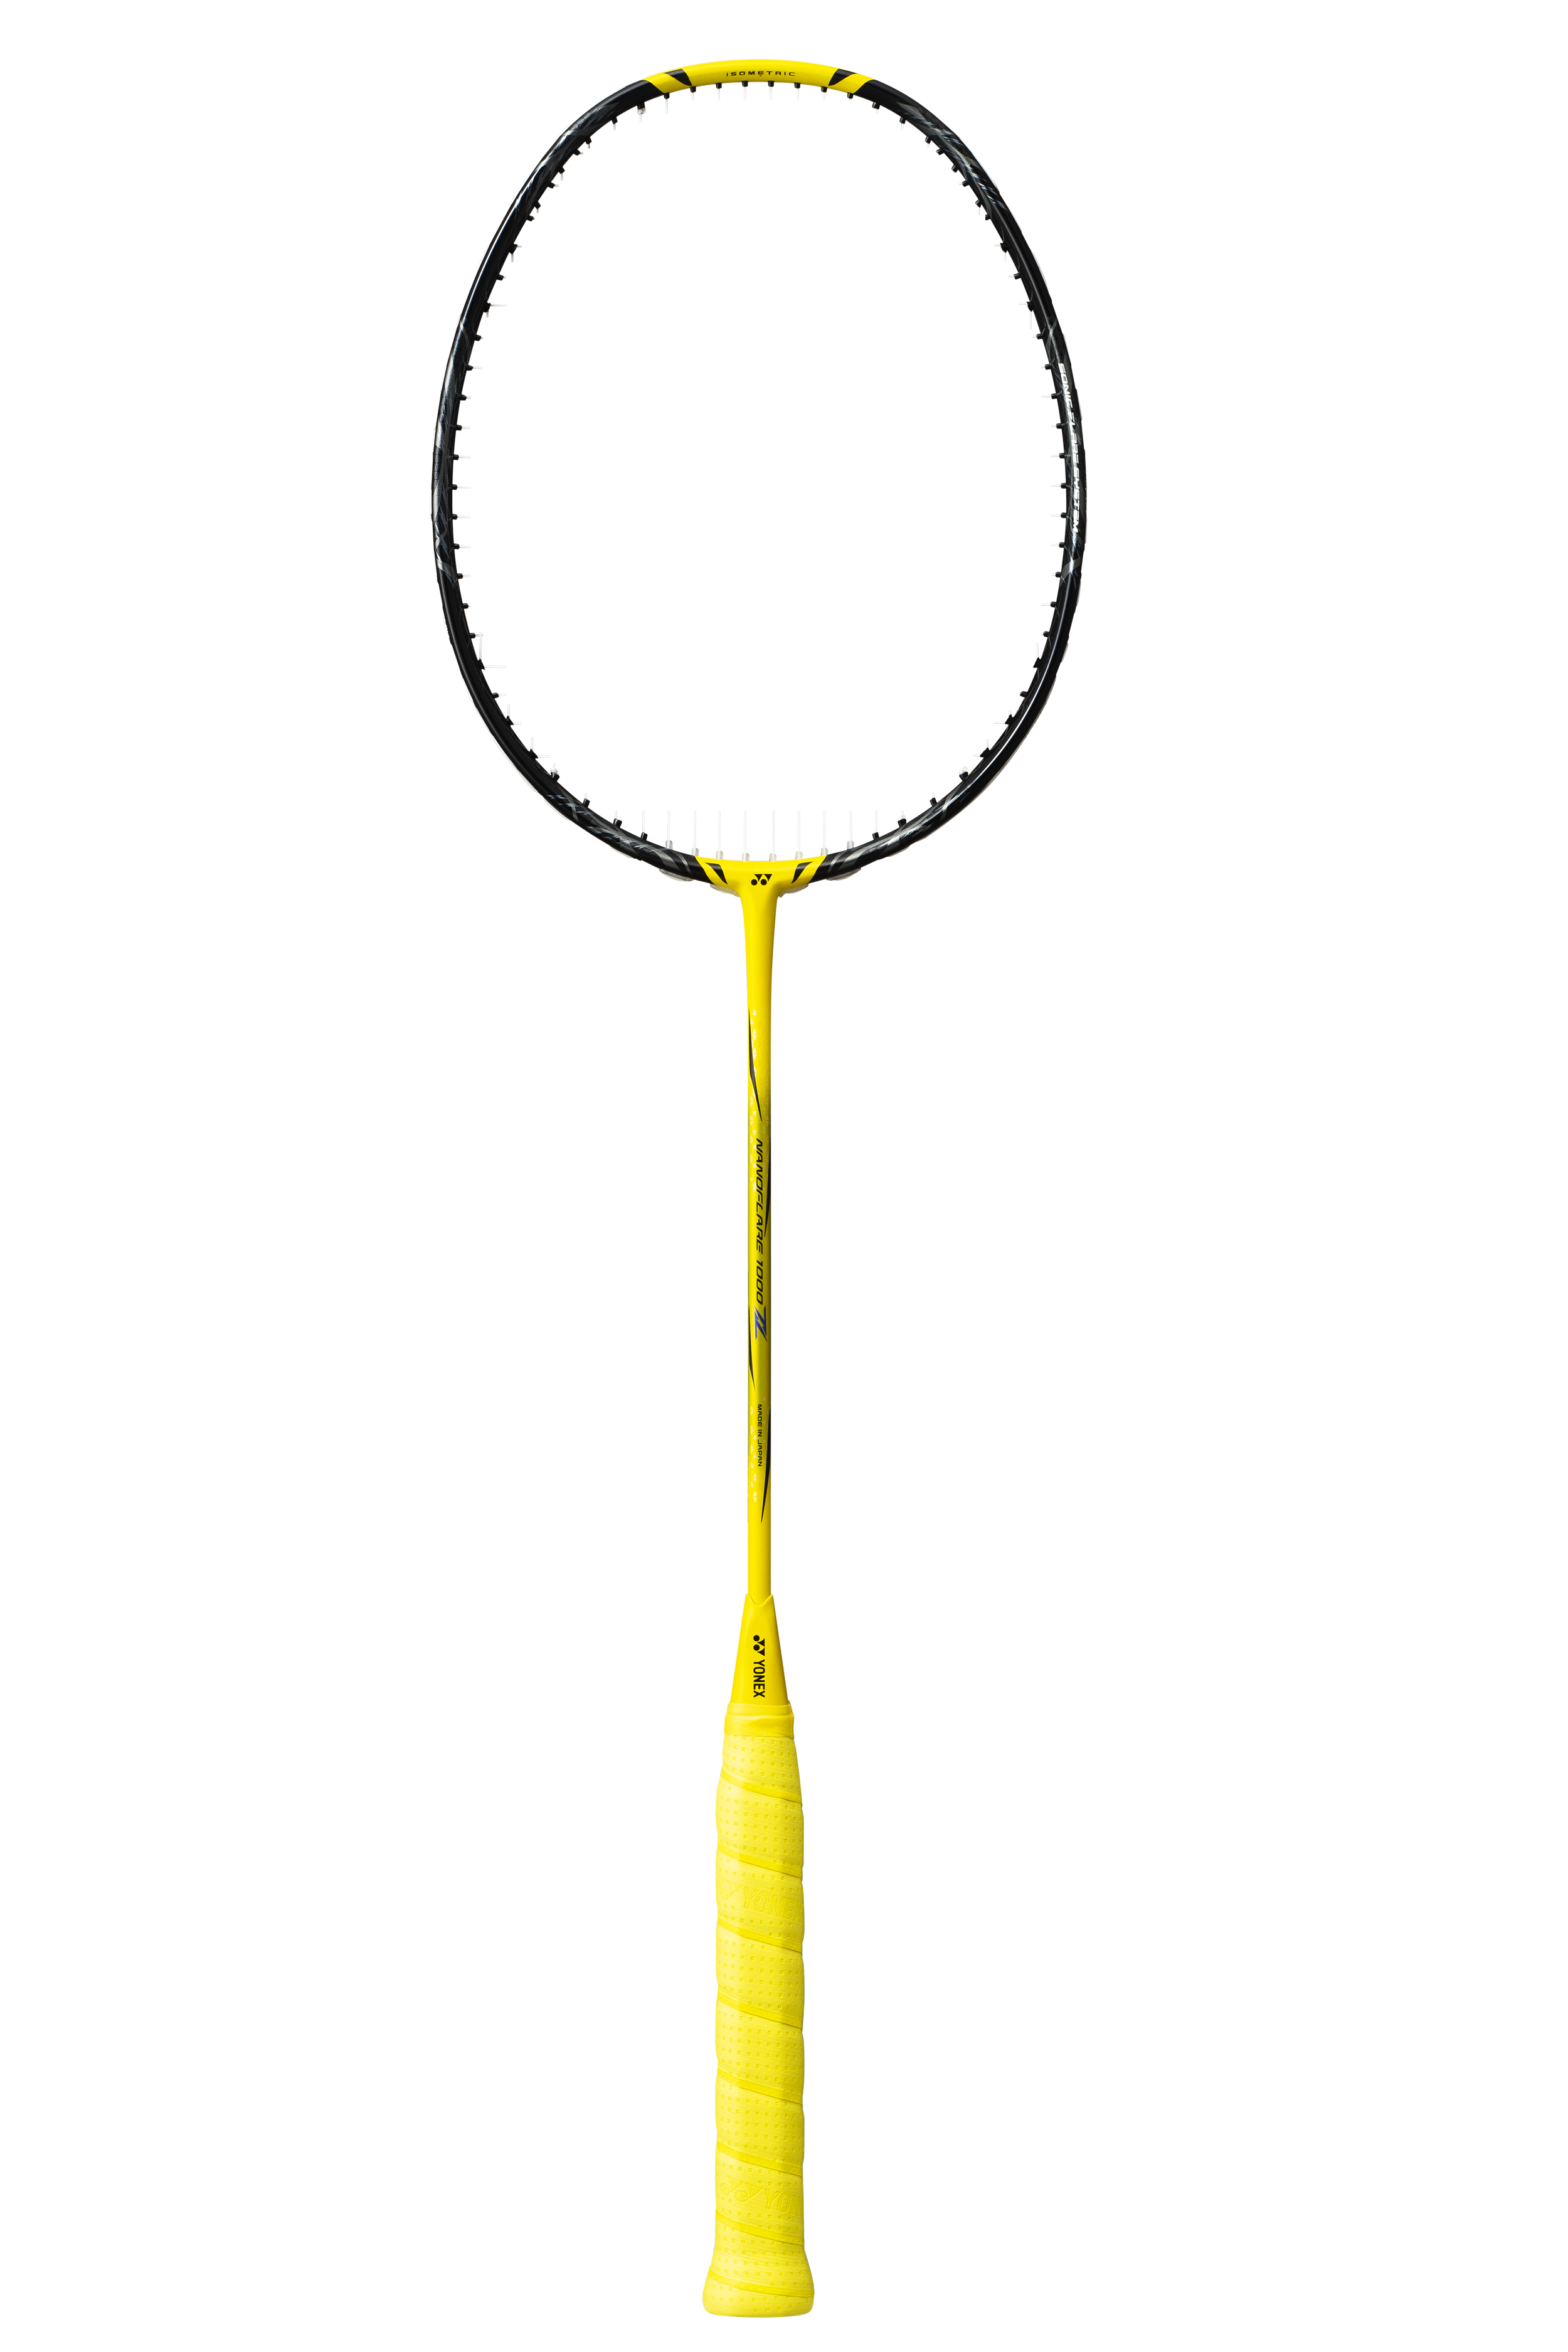 YONEX Nanoflare 1000Z Badminton Racquet - Lightning Yellow - Pre-order